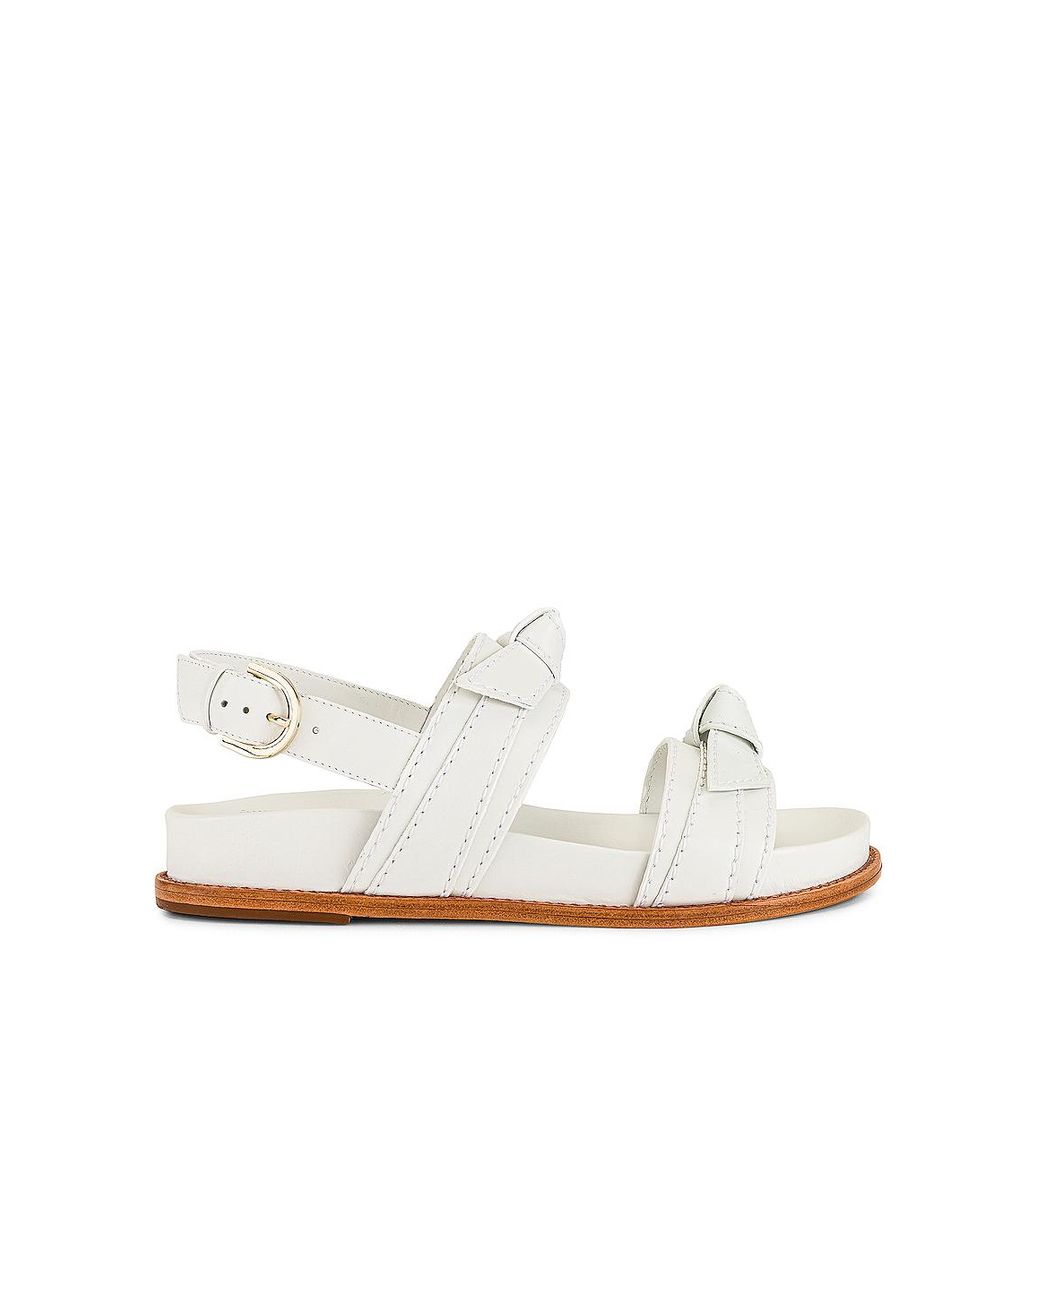 Alexandre Birman Clarita Sport Sandal in White - Lyst